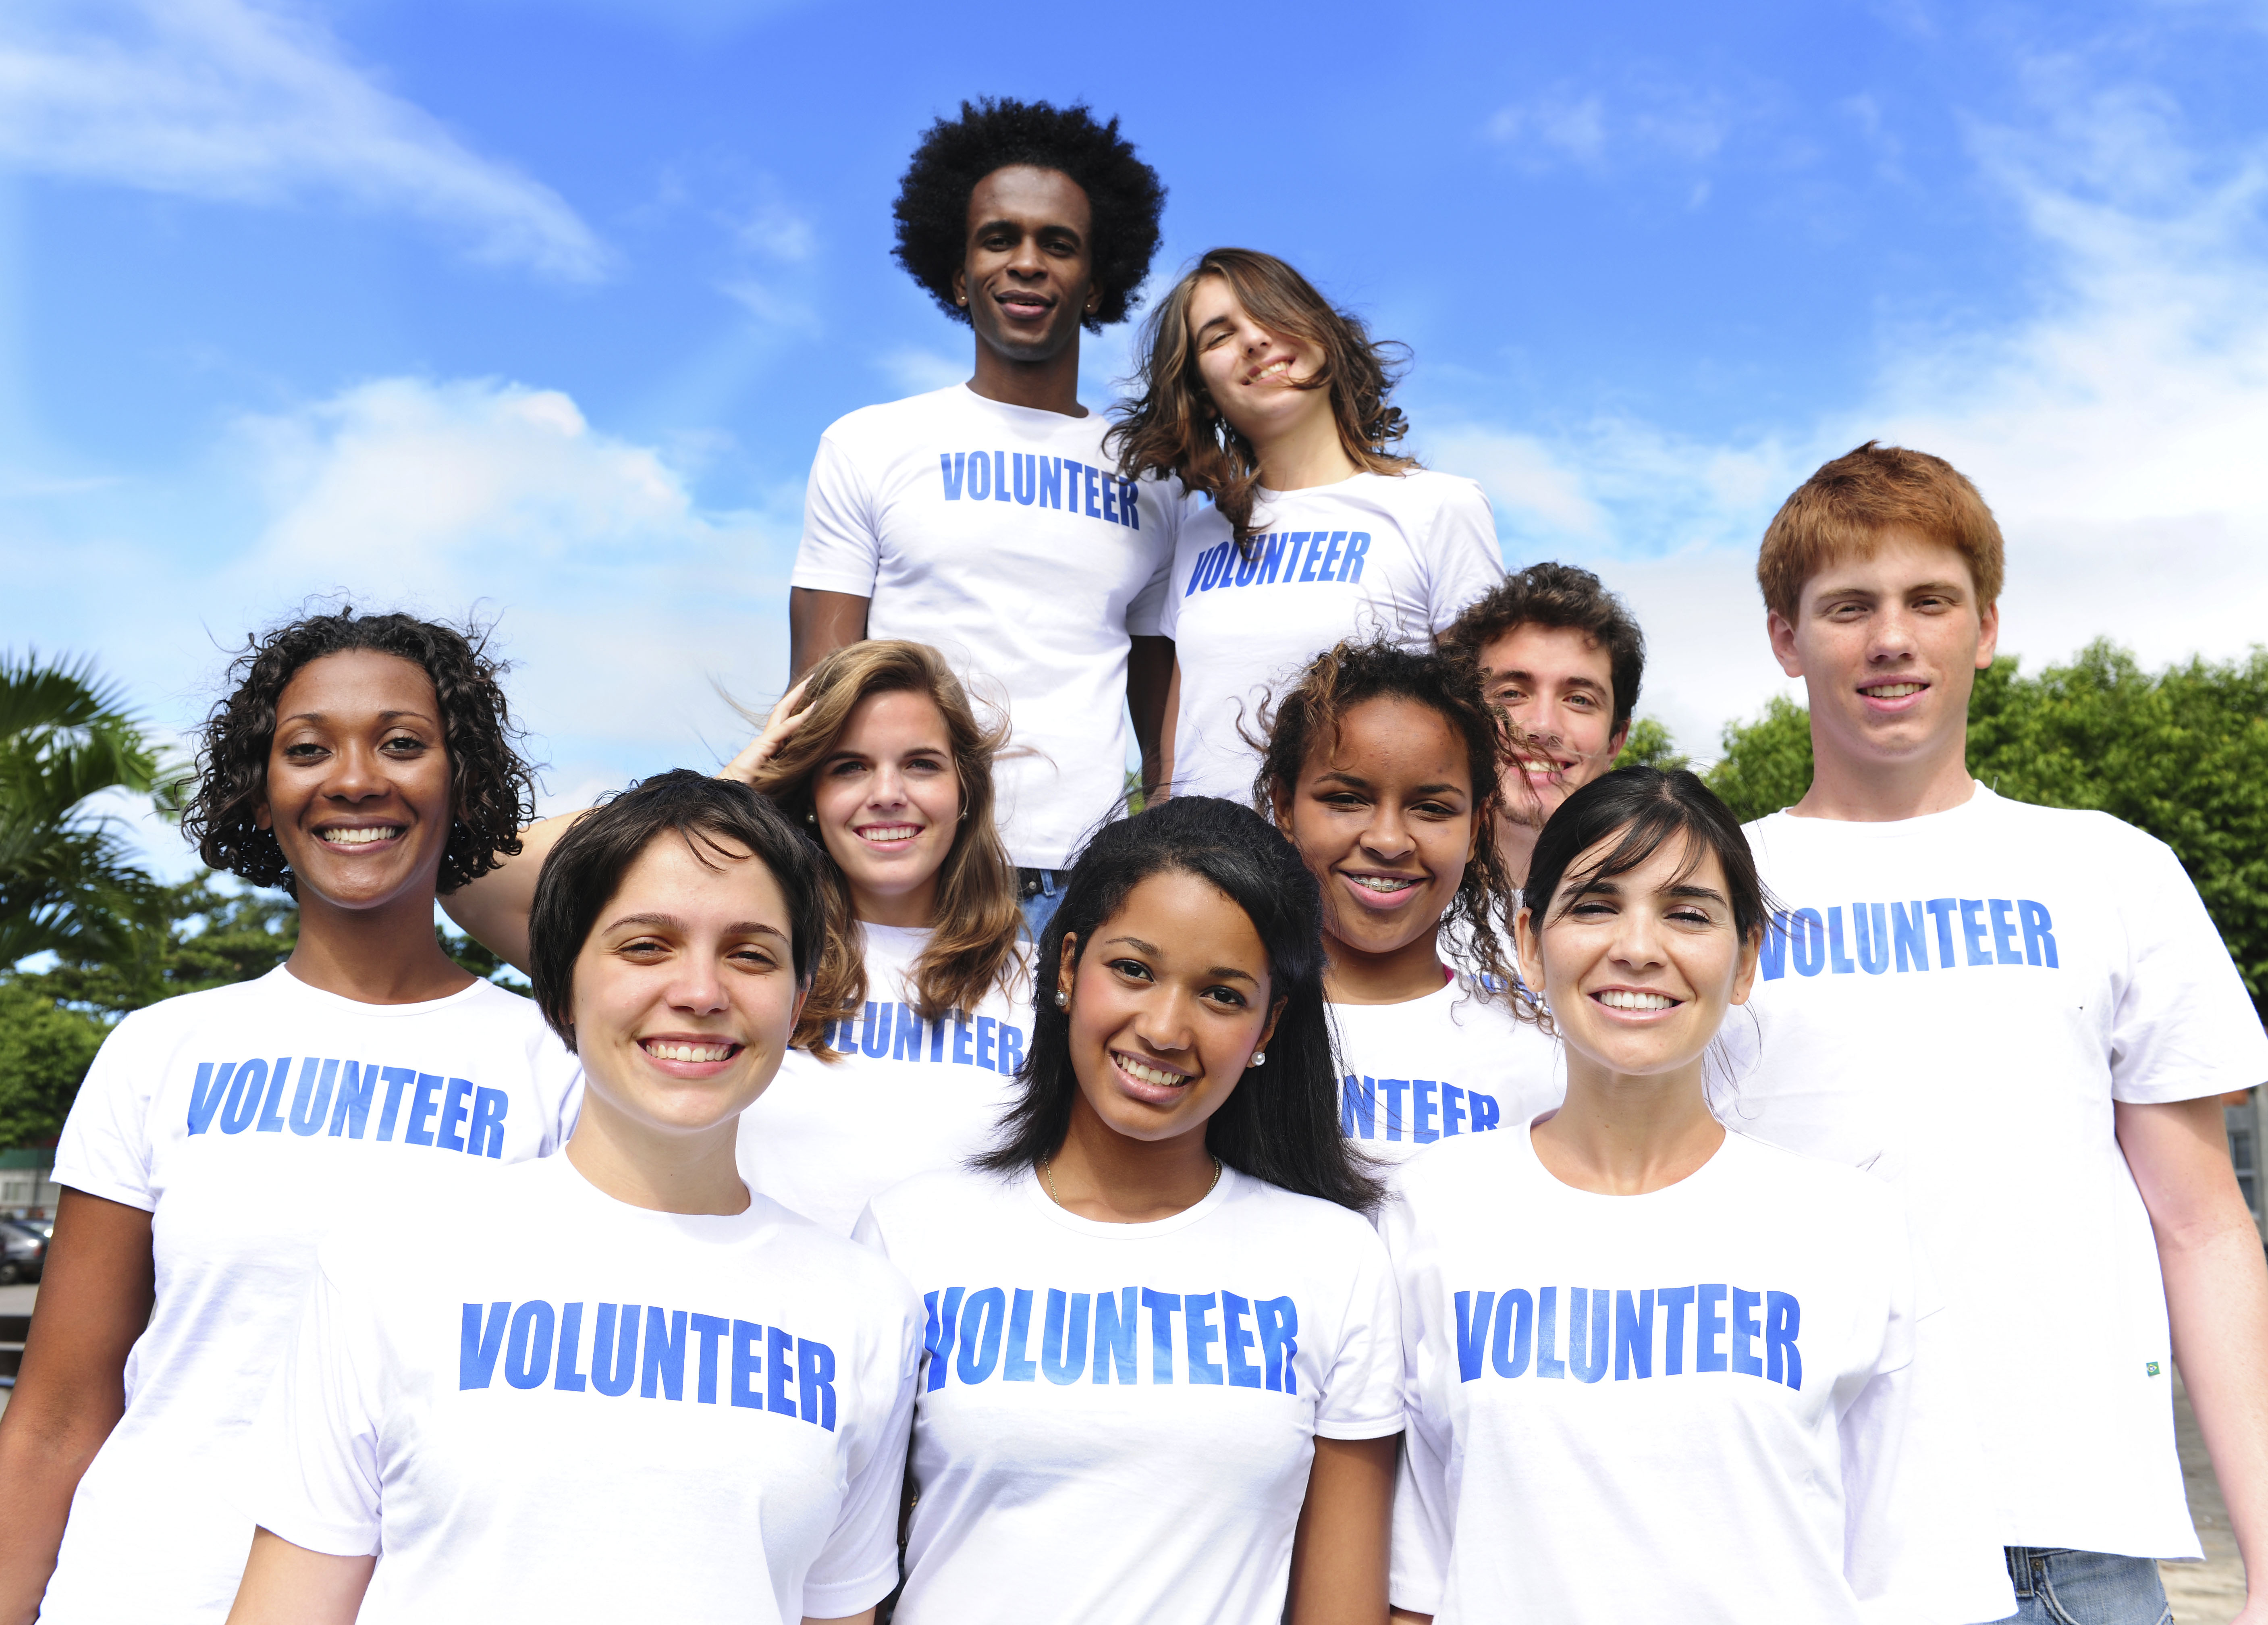 volunteers standing together in white volunteer shirts